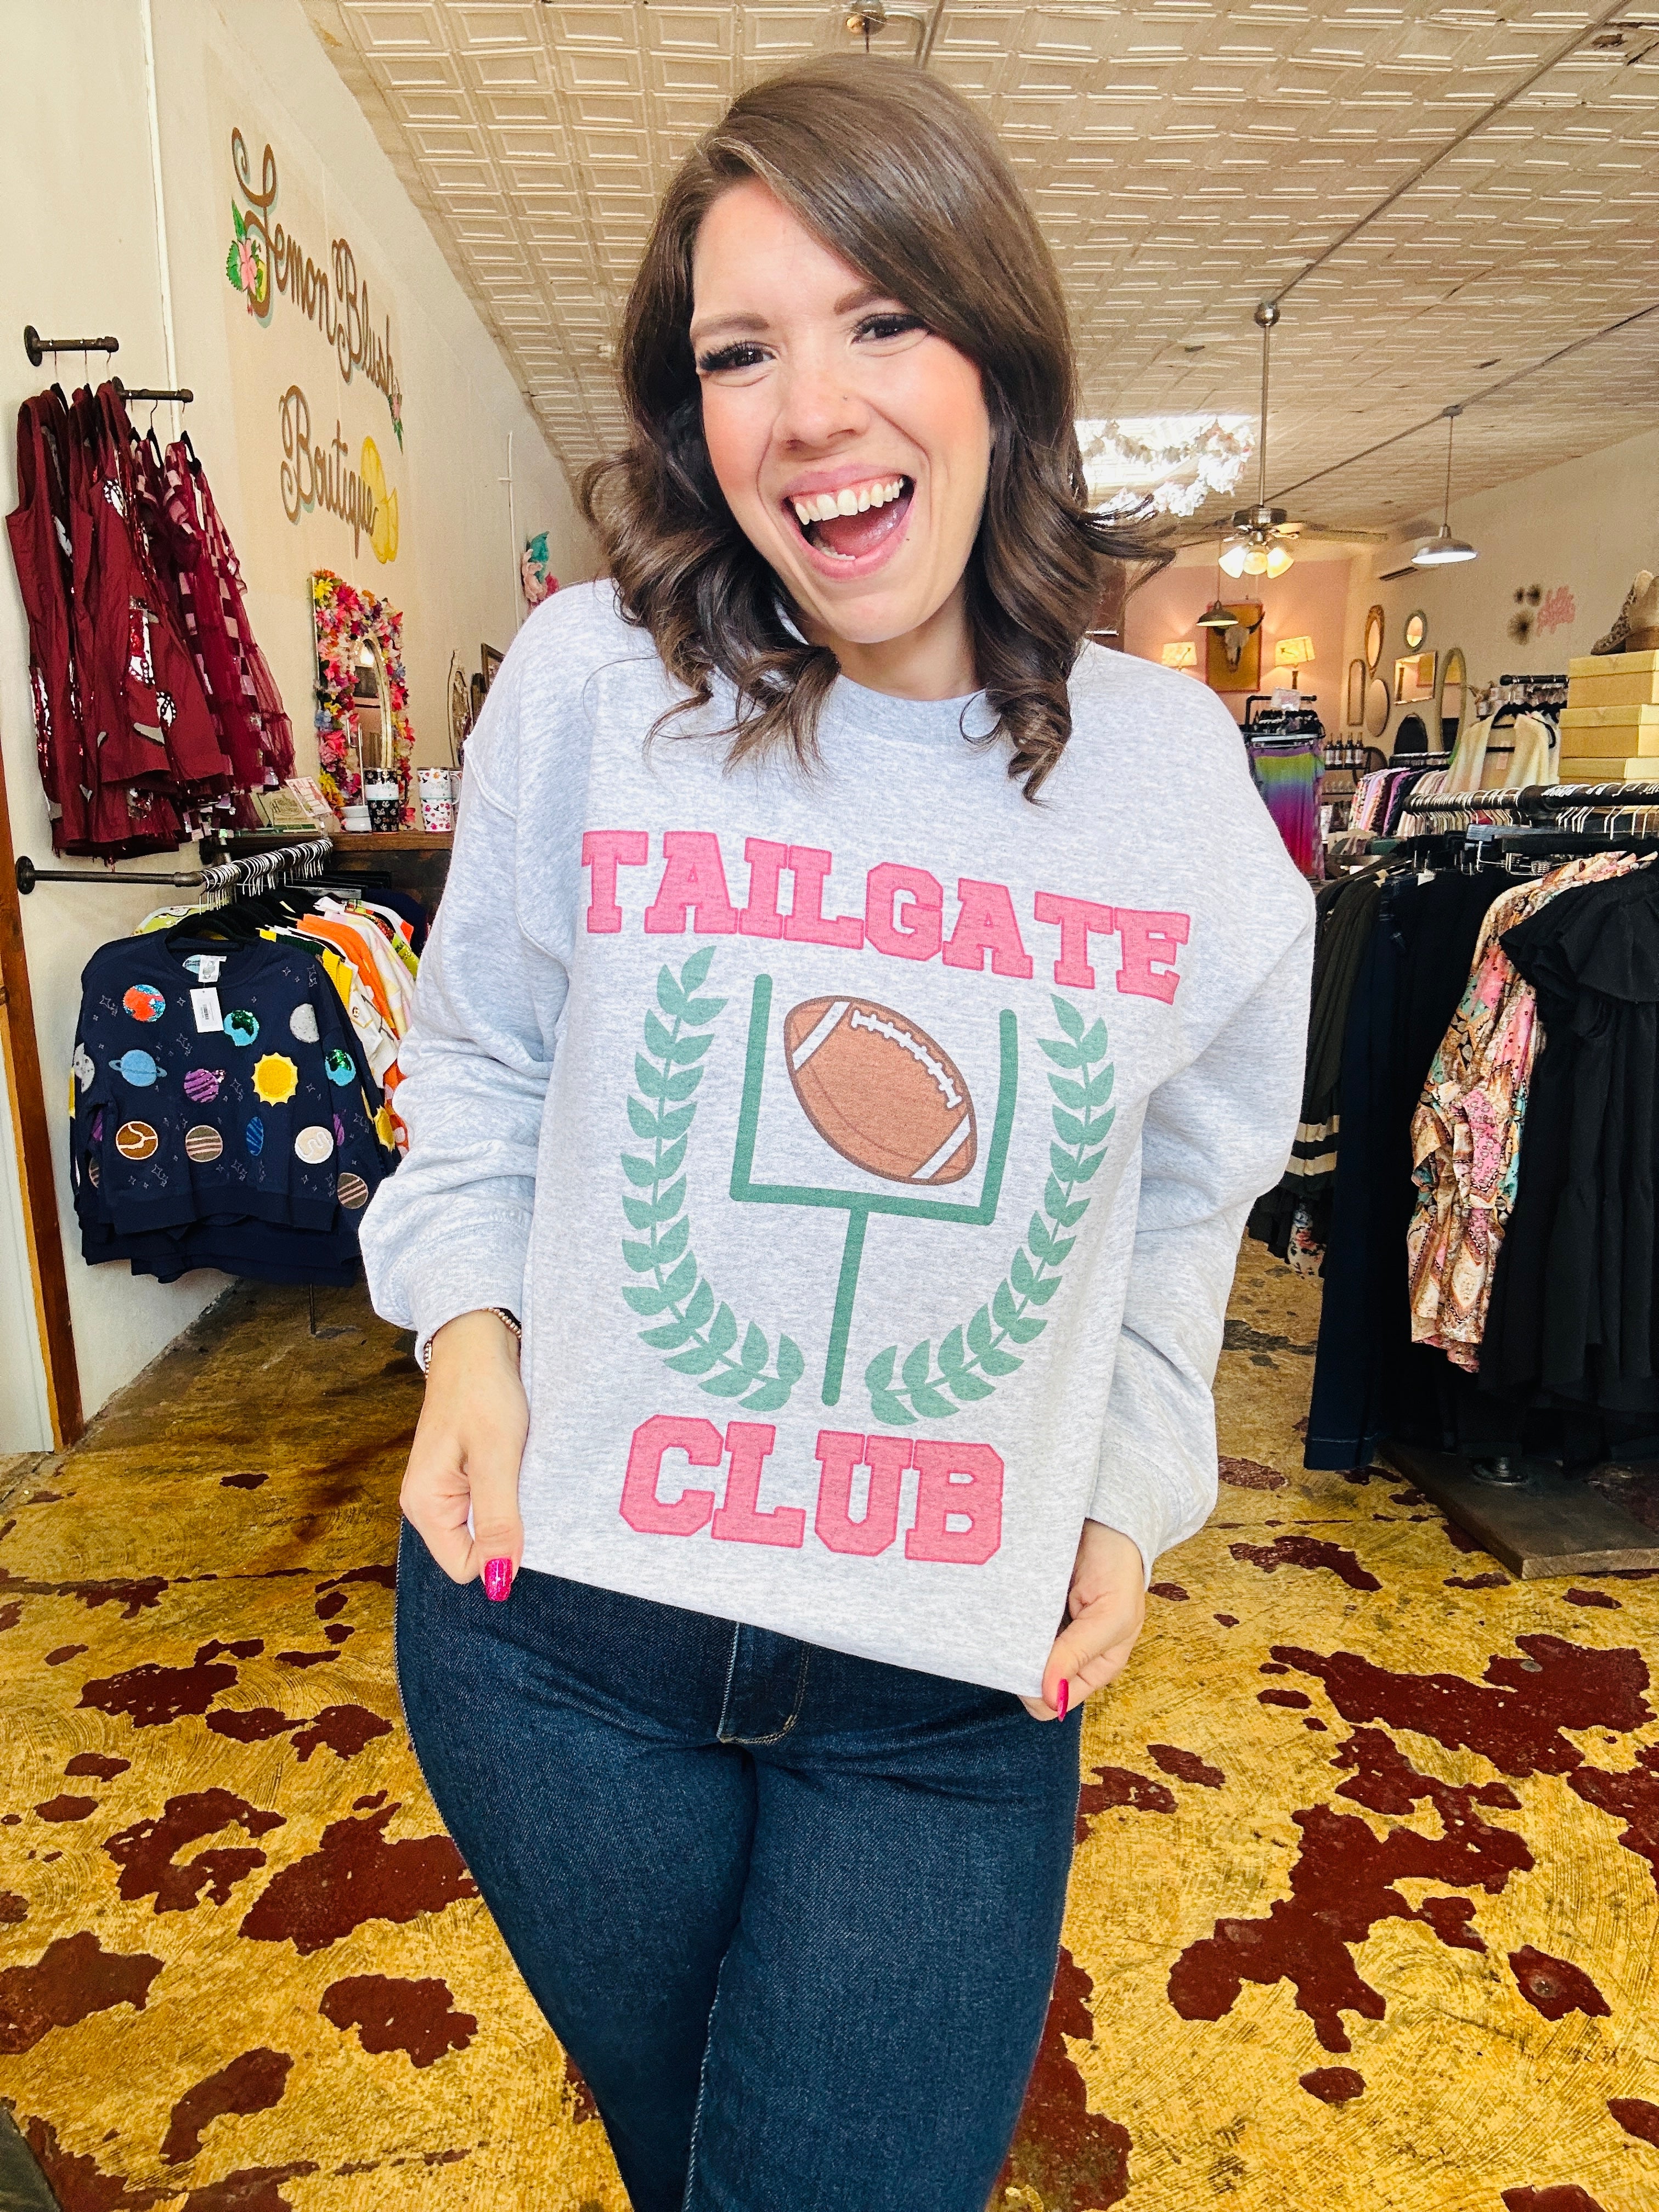 Tailgate Club Sweatshirt